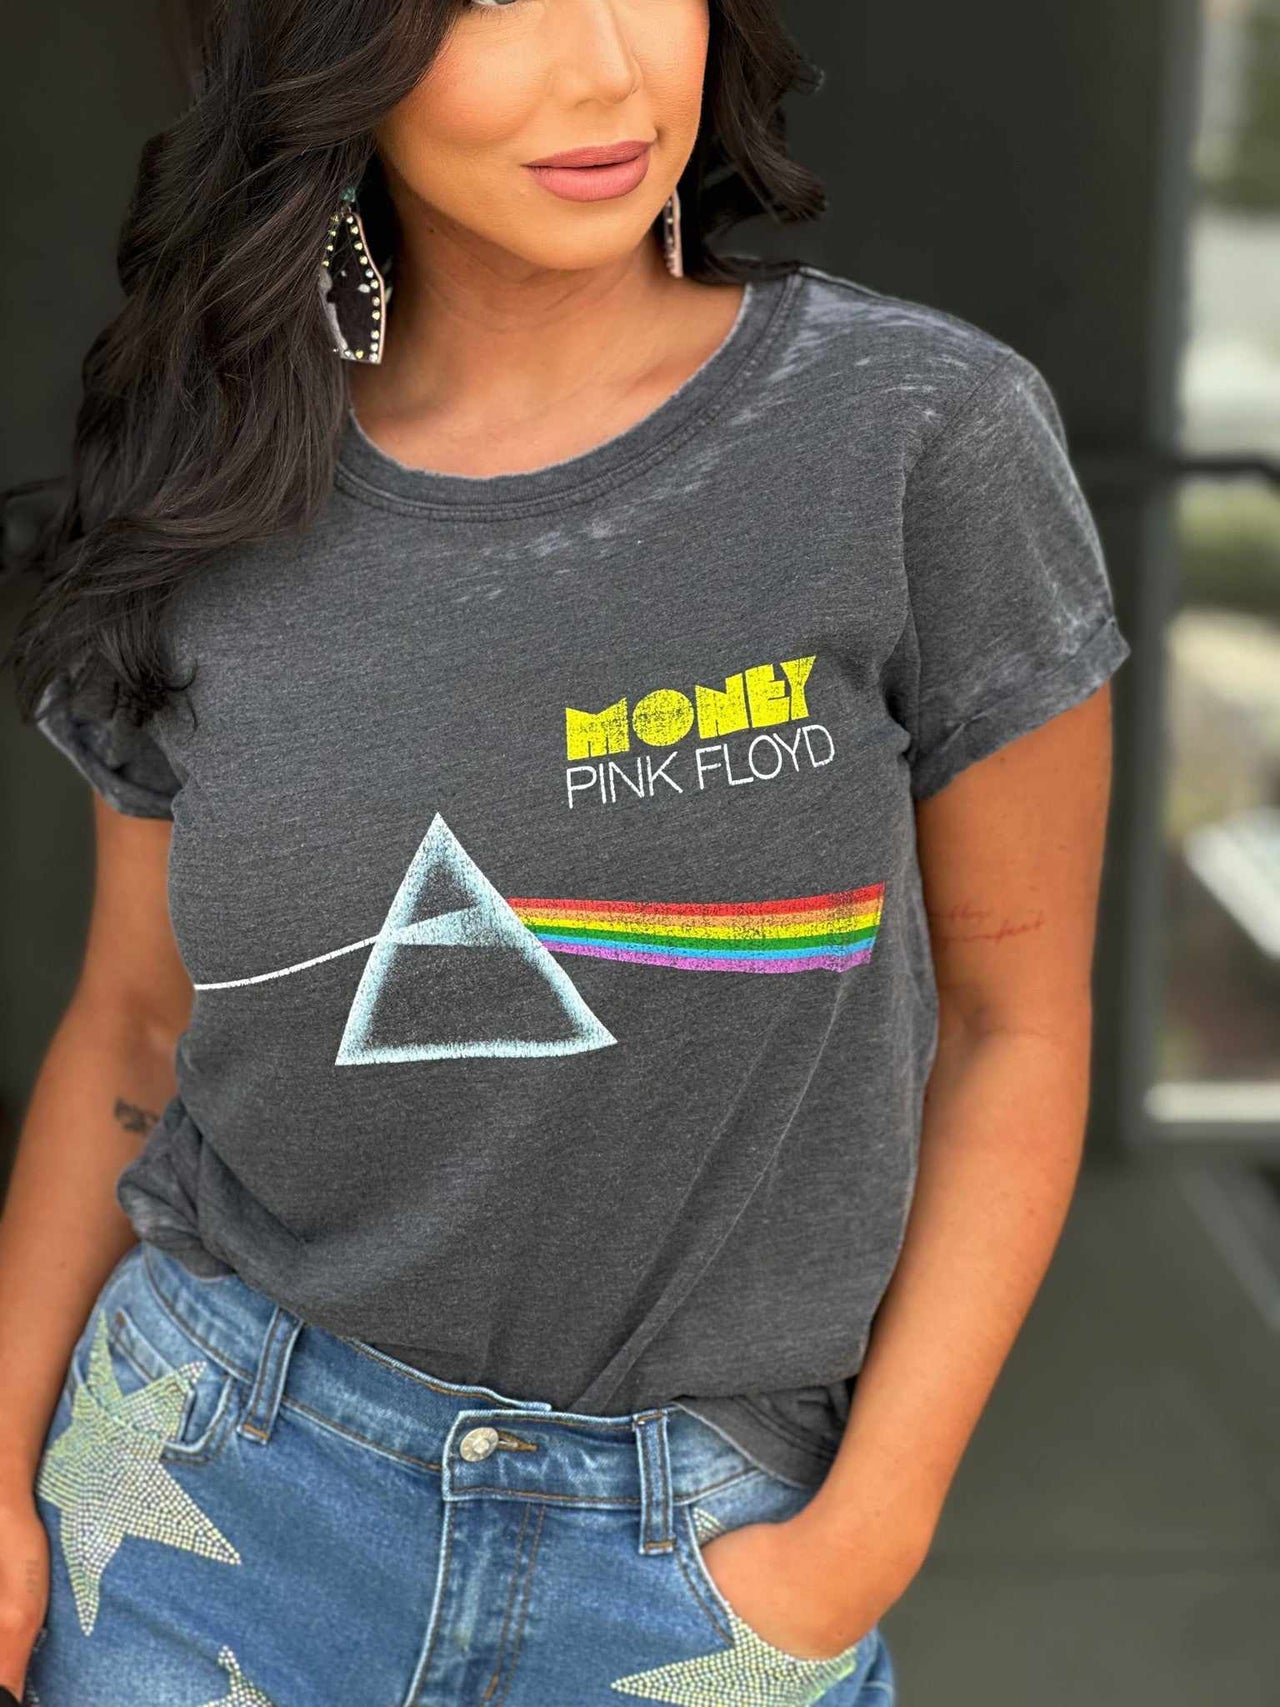 "Dark Side of Money" Pink Floyd T-shirt.